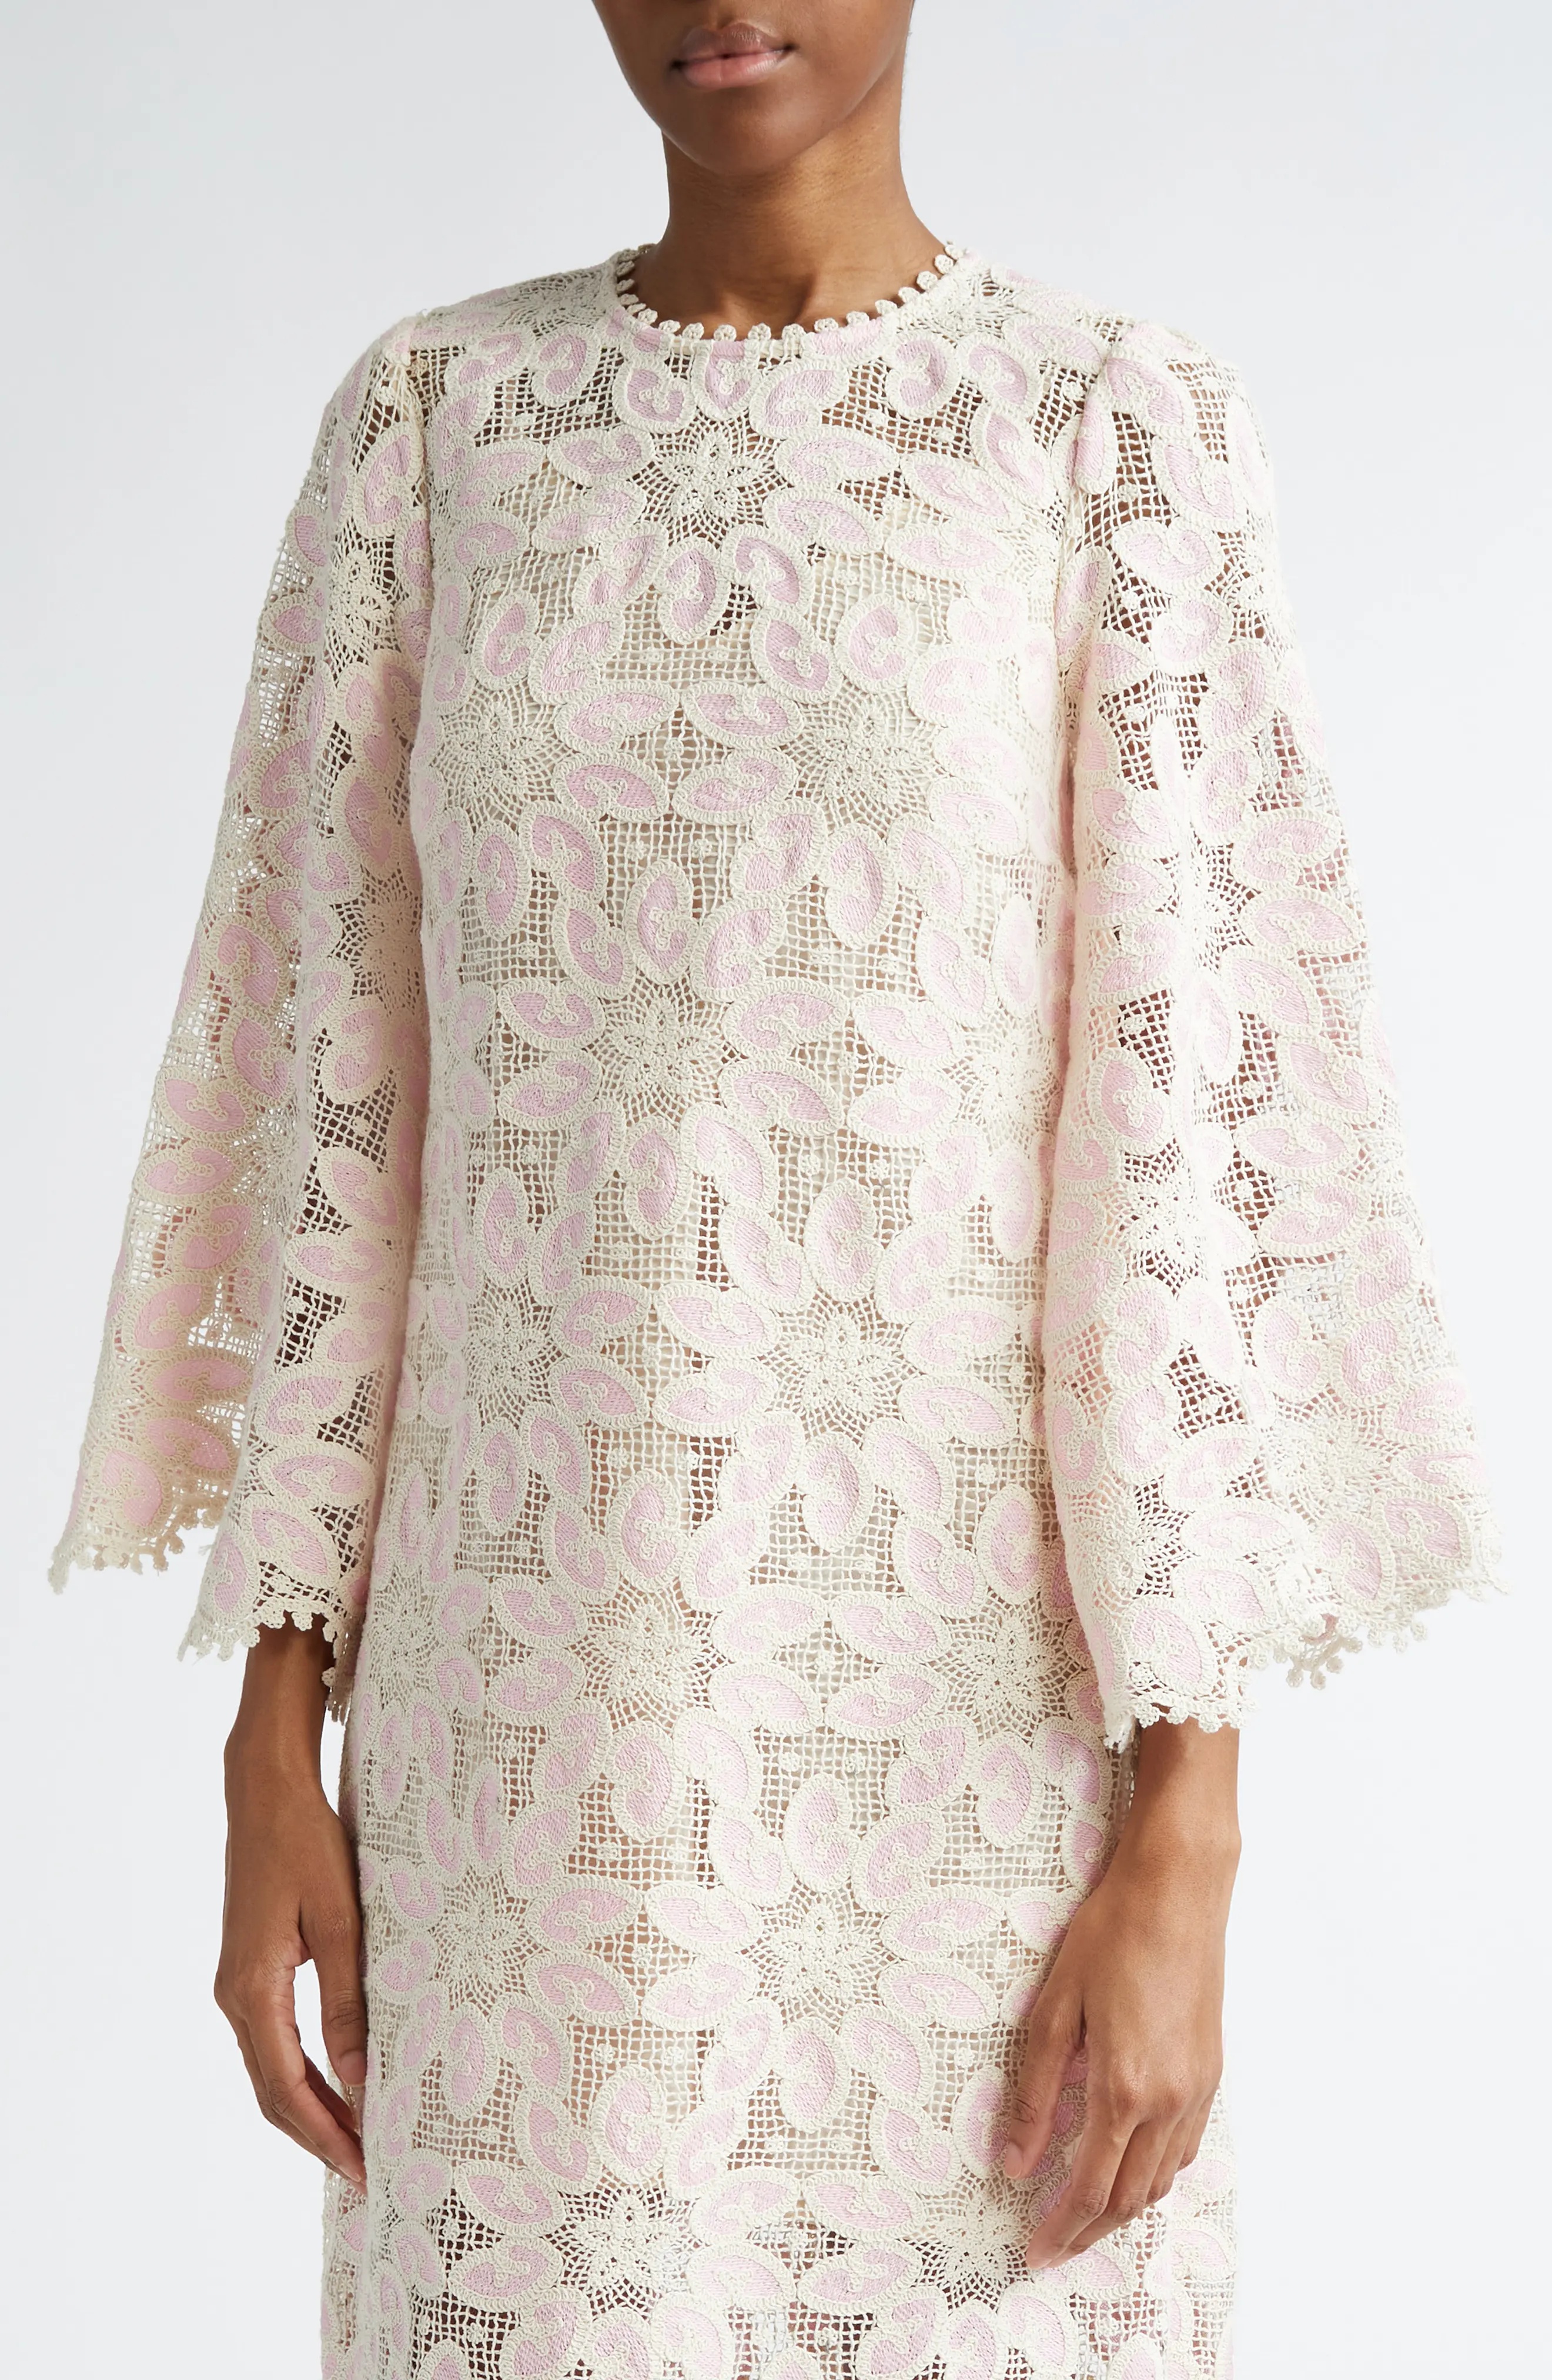 Ottie Long Sleeve Guipure Lace Cotton Blend Midi Dress in Cream/Pink - 4